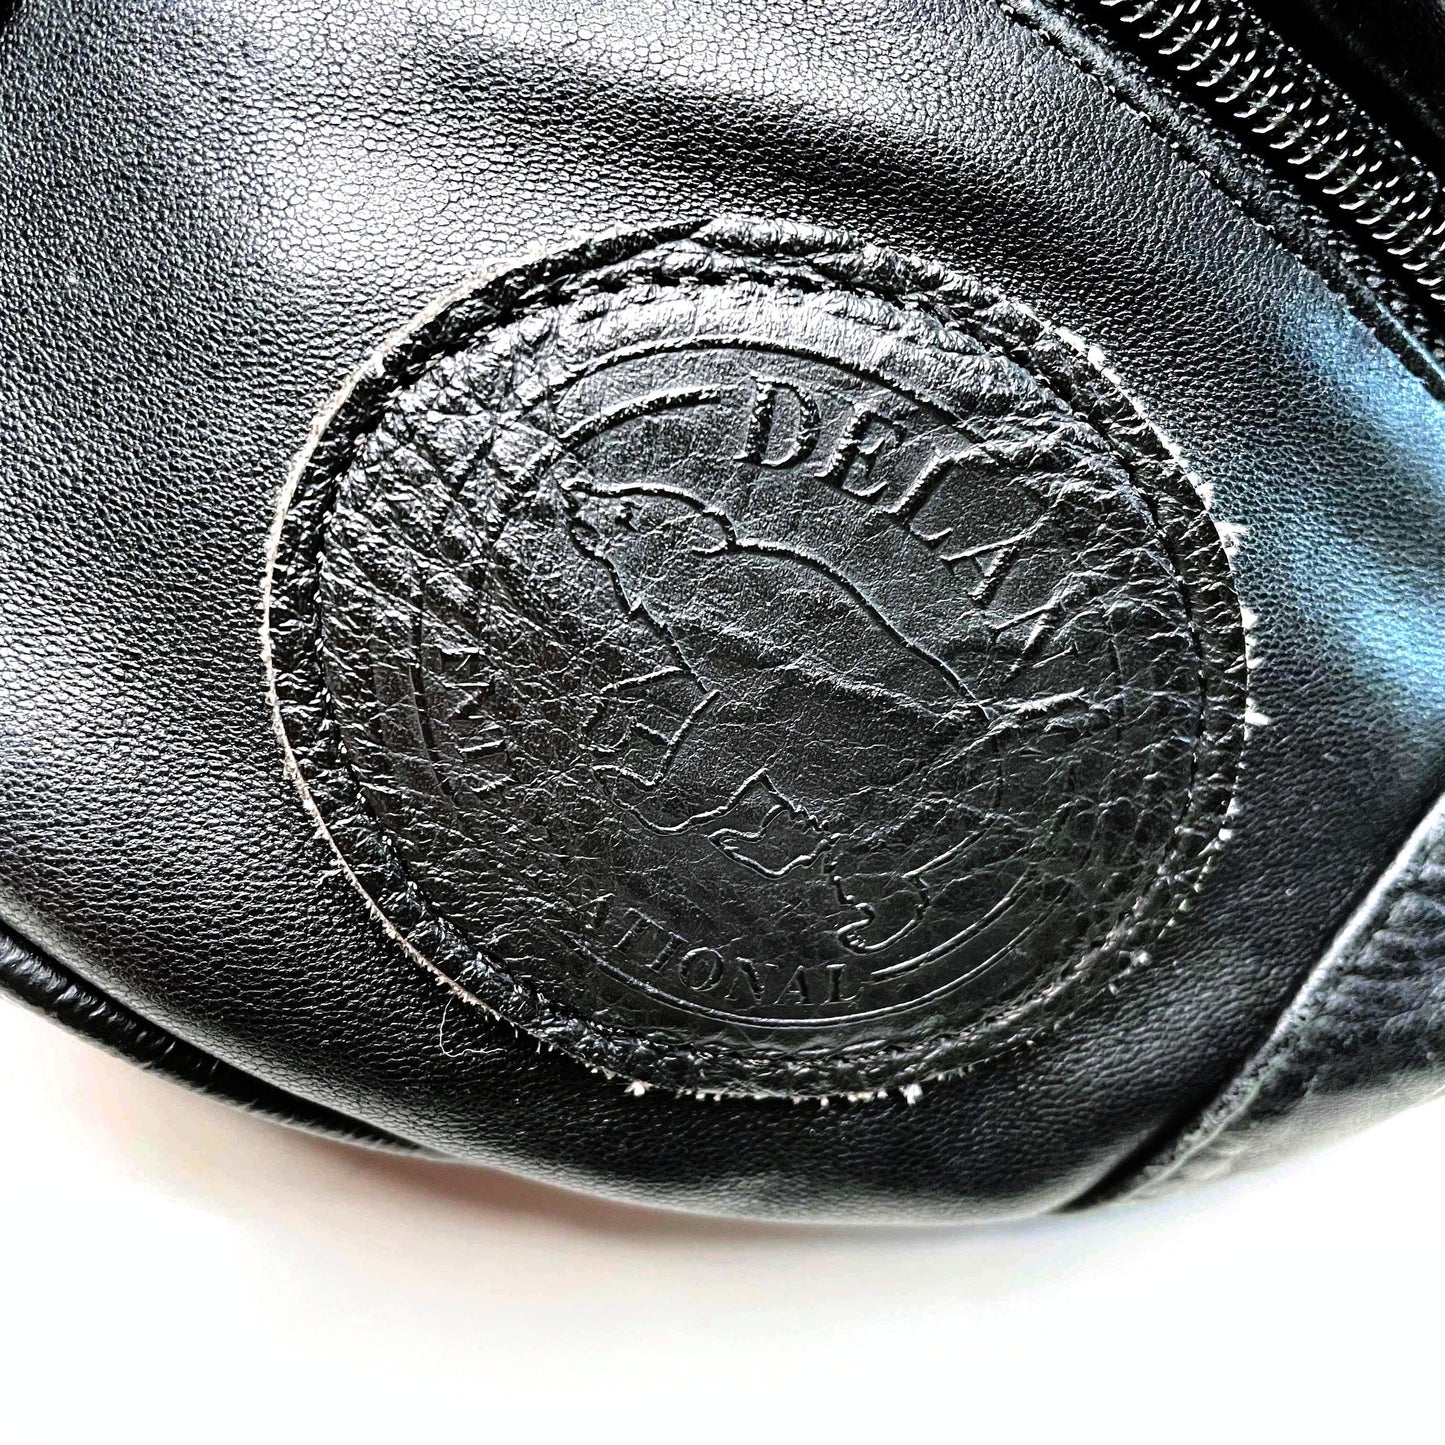 vintage black leather fanny pack with polar bear crest